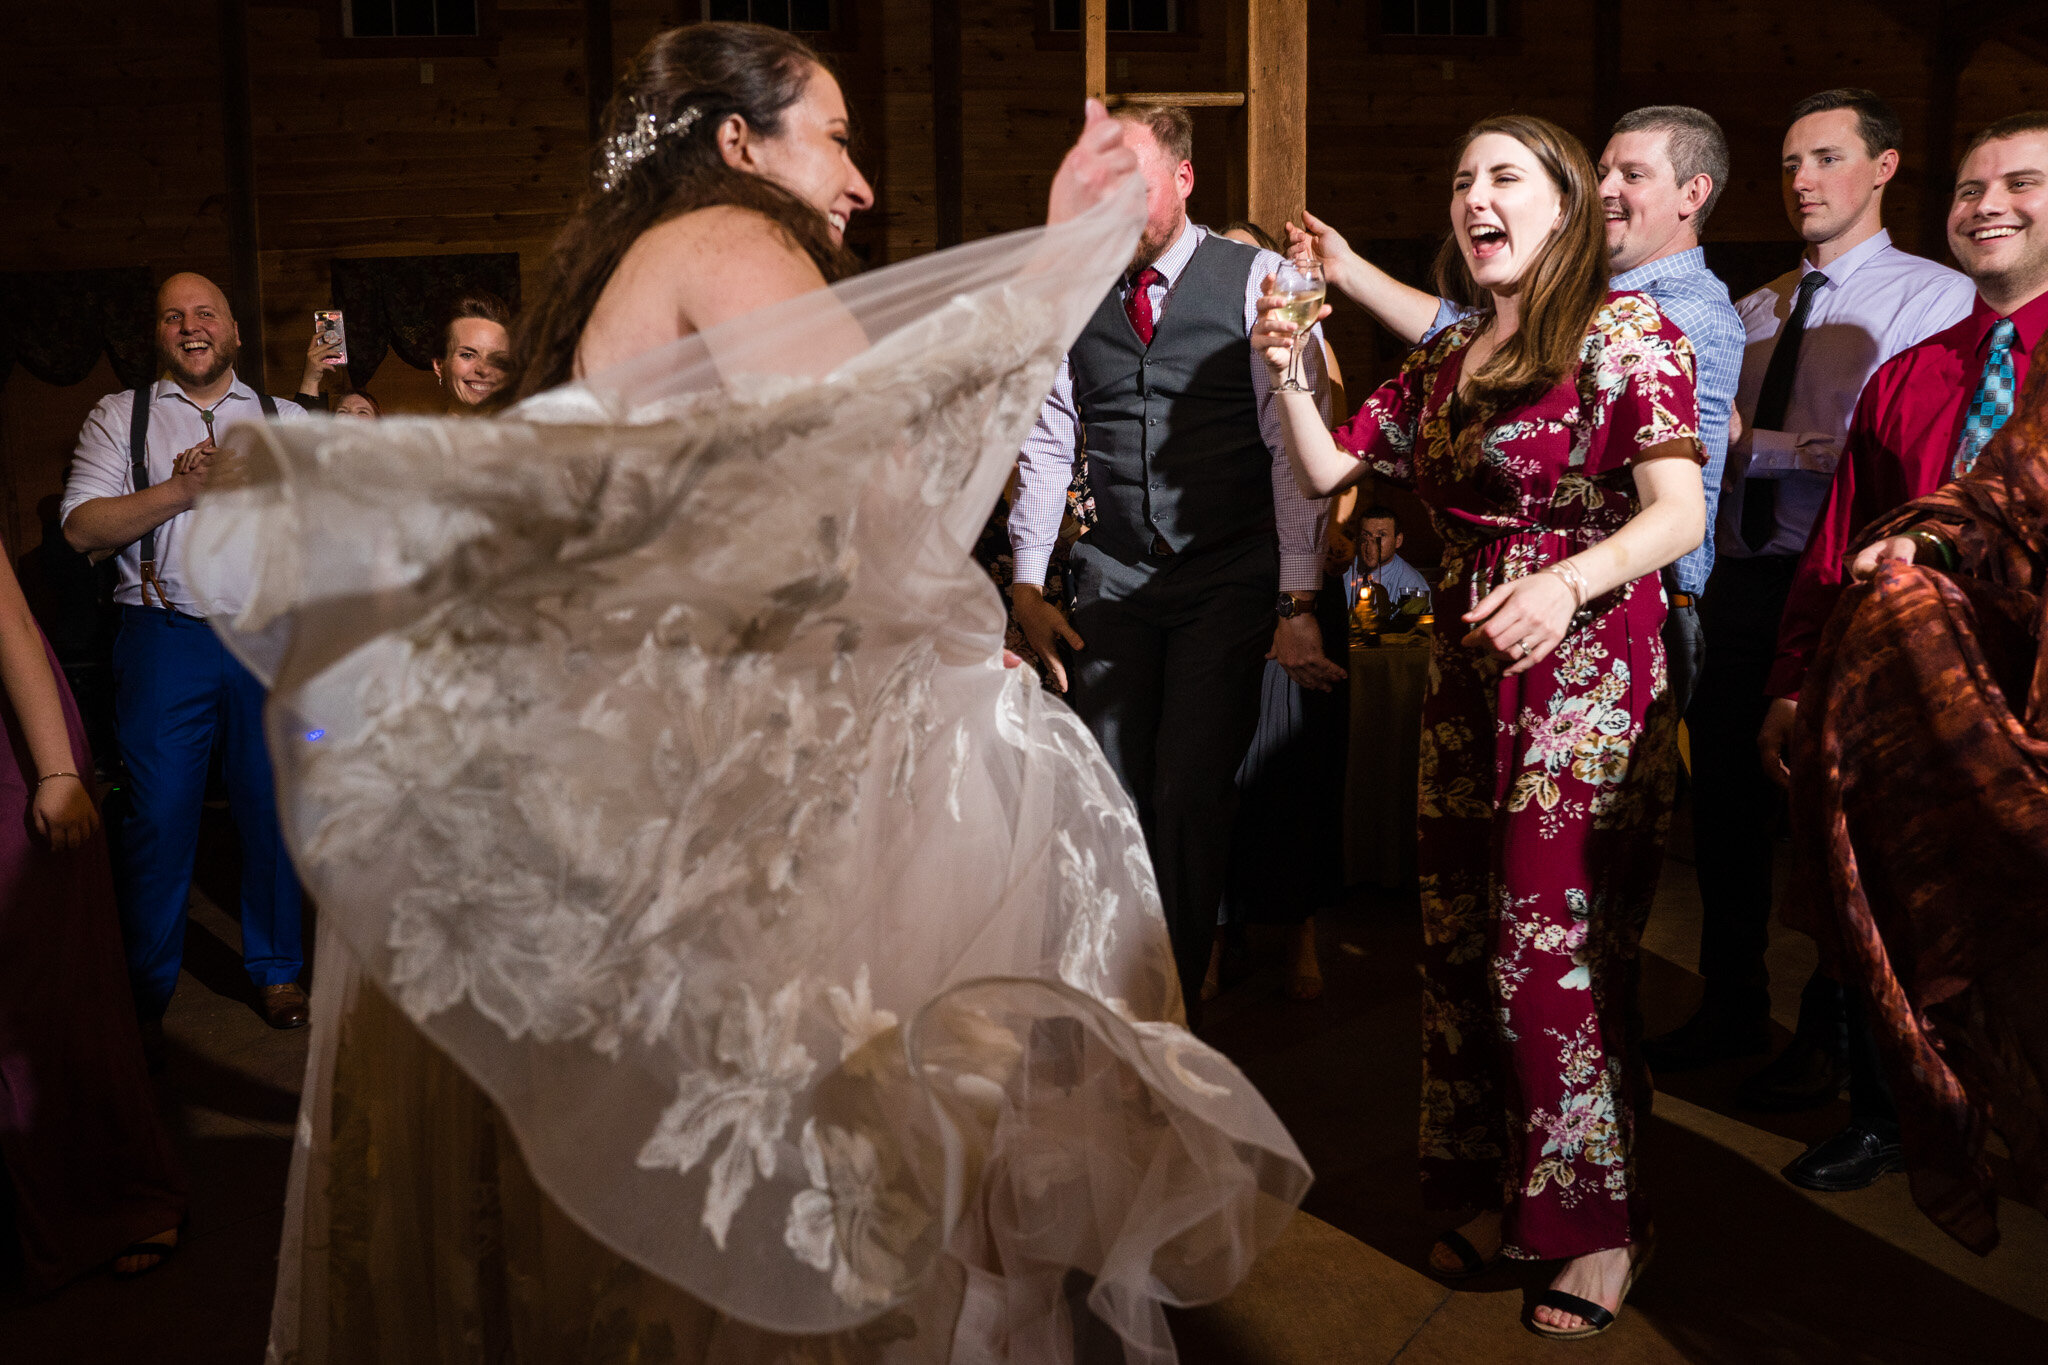 ringing and dancing at a wedding reception